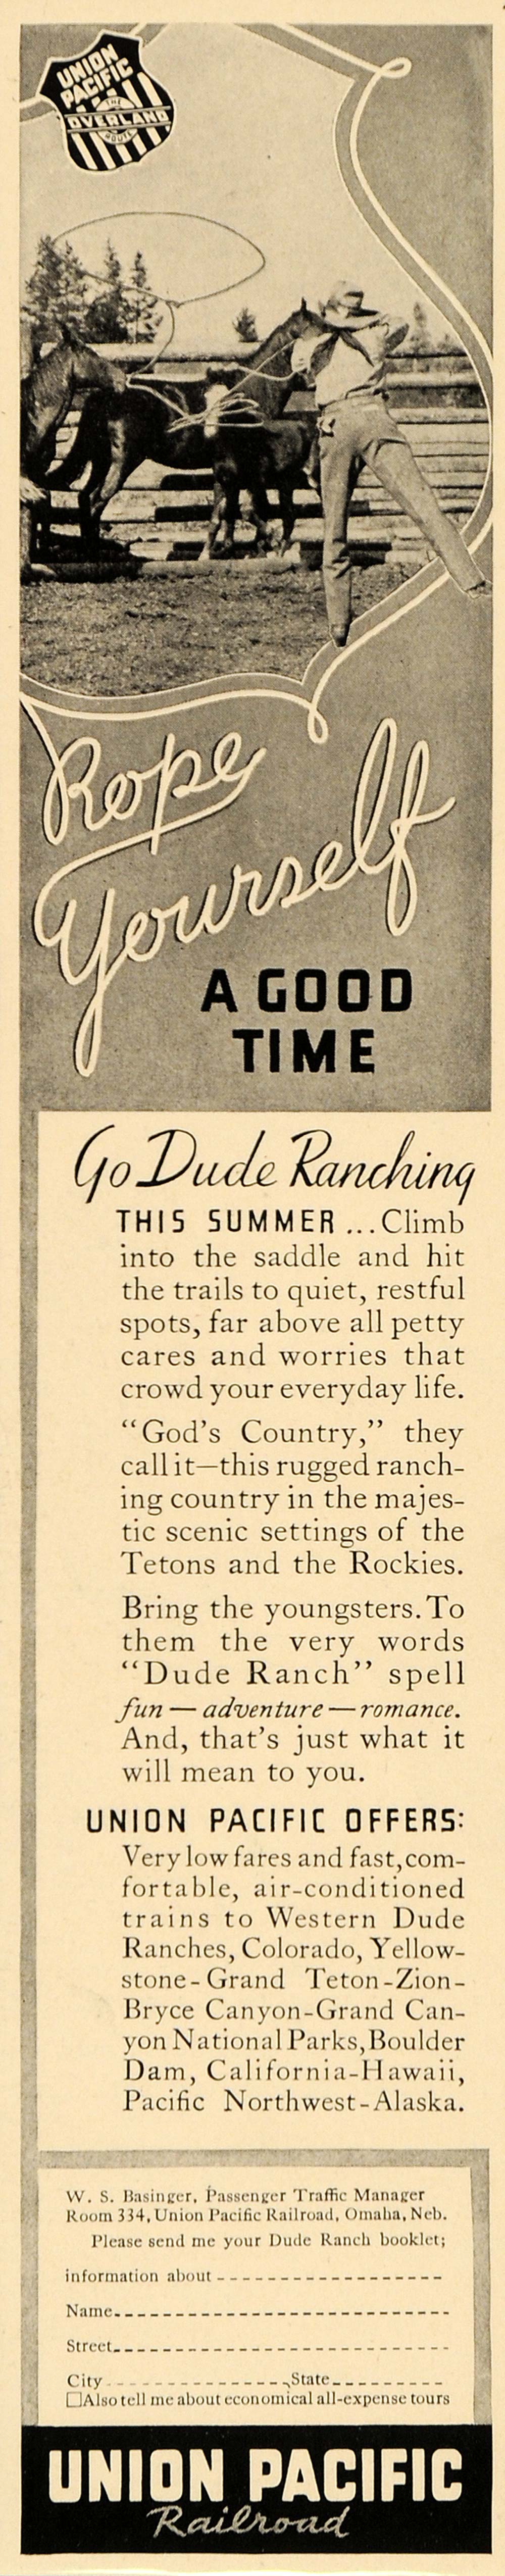 1936 Ad Union Pacific Railroad Summer Dude Ranching Fun - ORIGINAL FT9